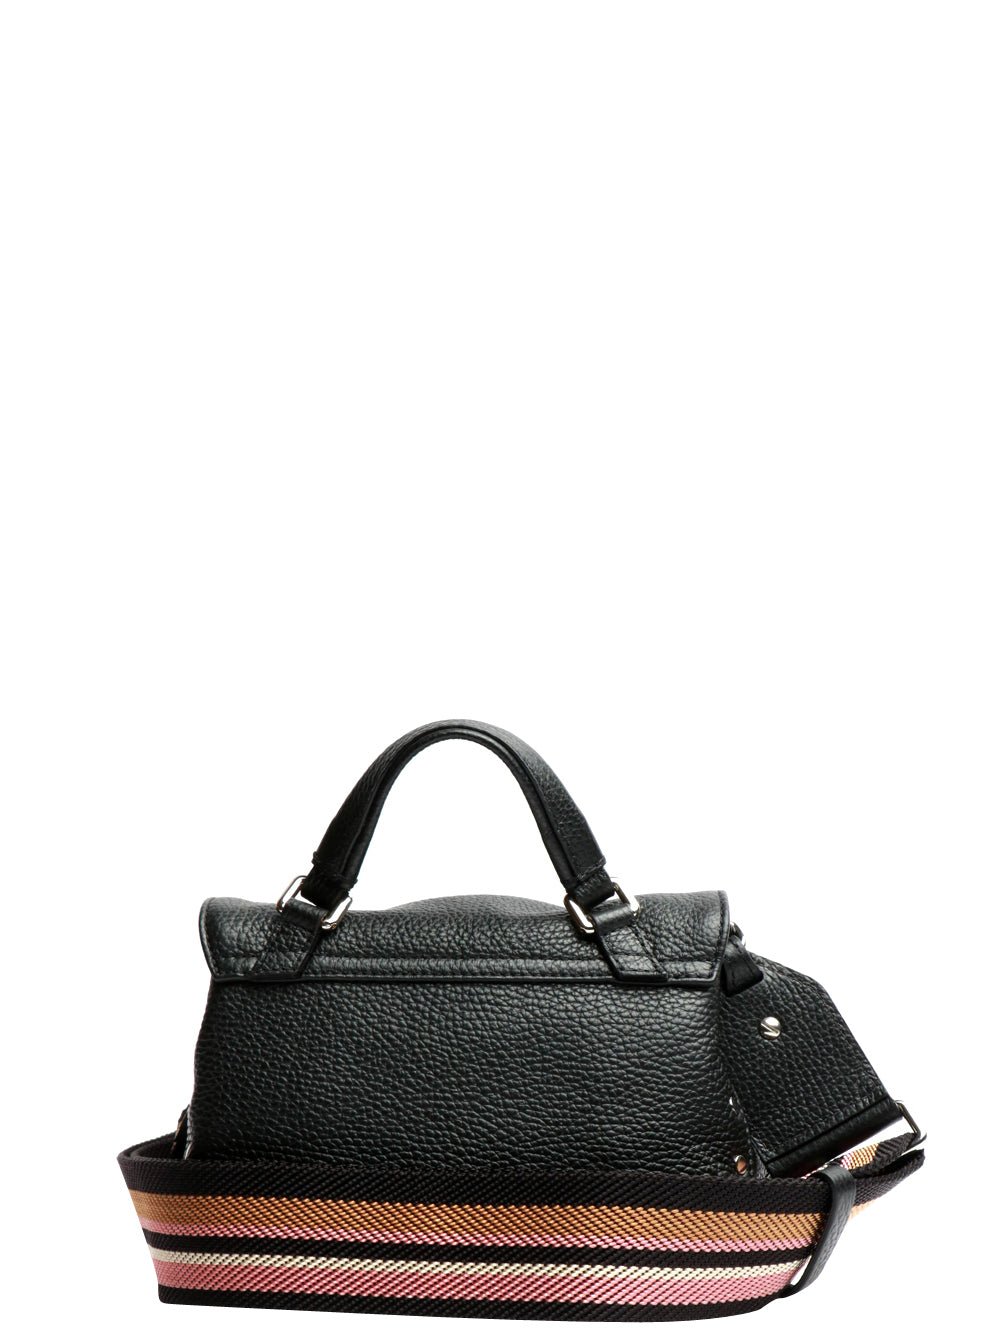 Postina Daily Baby Handbag in Black Leather with Shoulder Strap